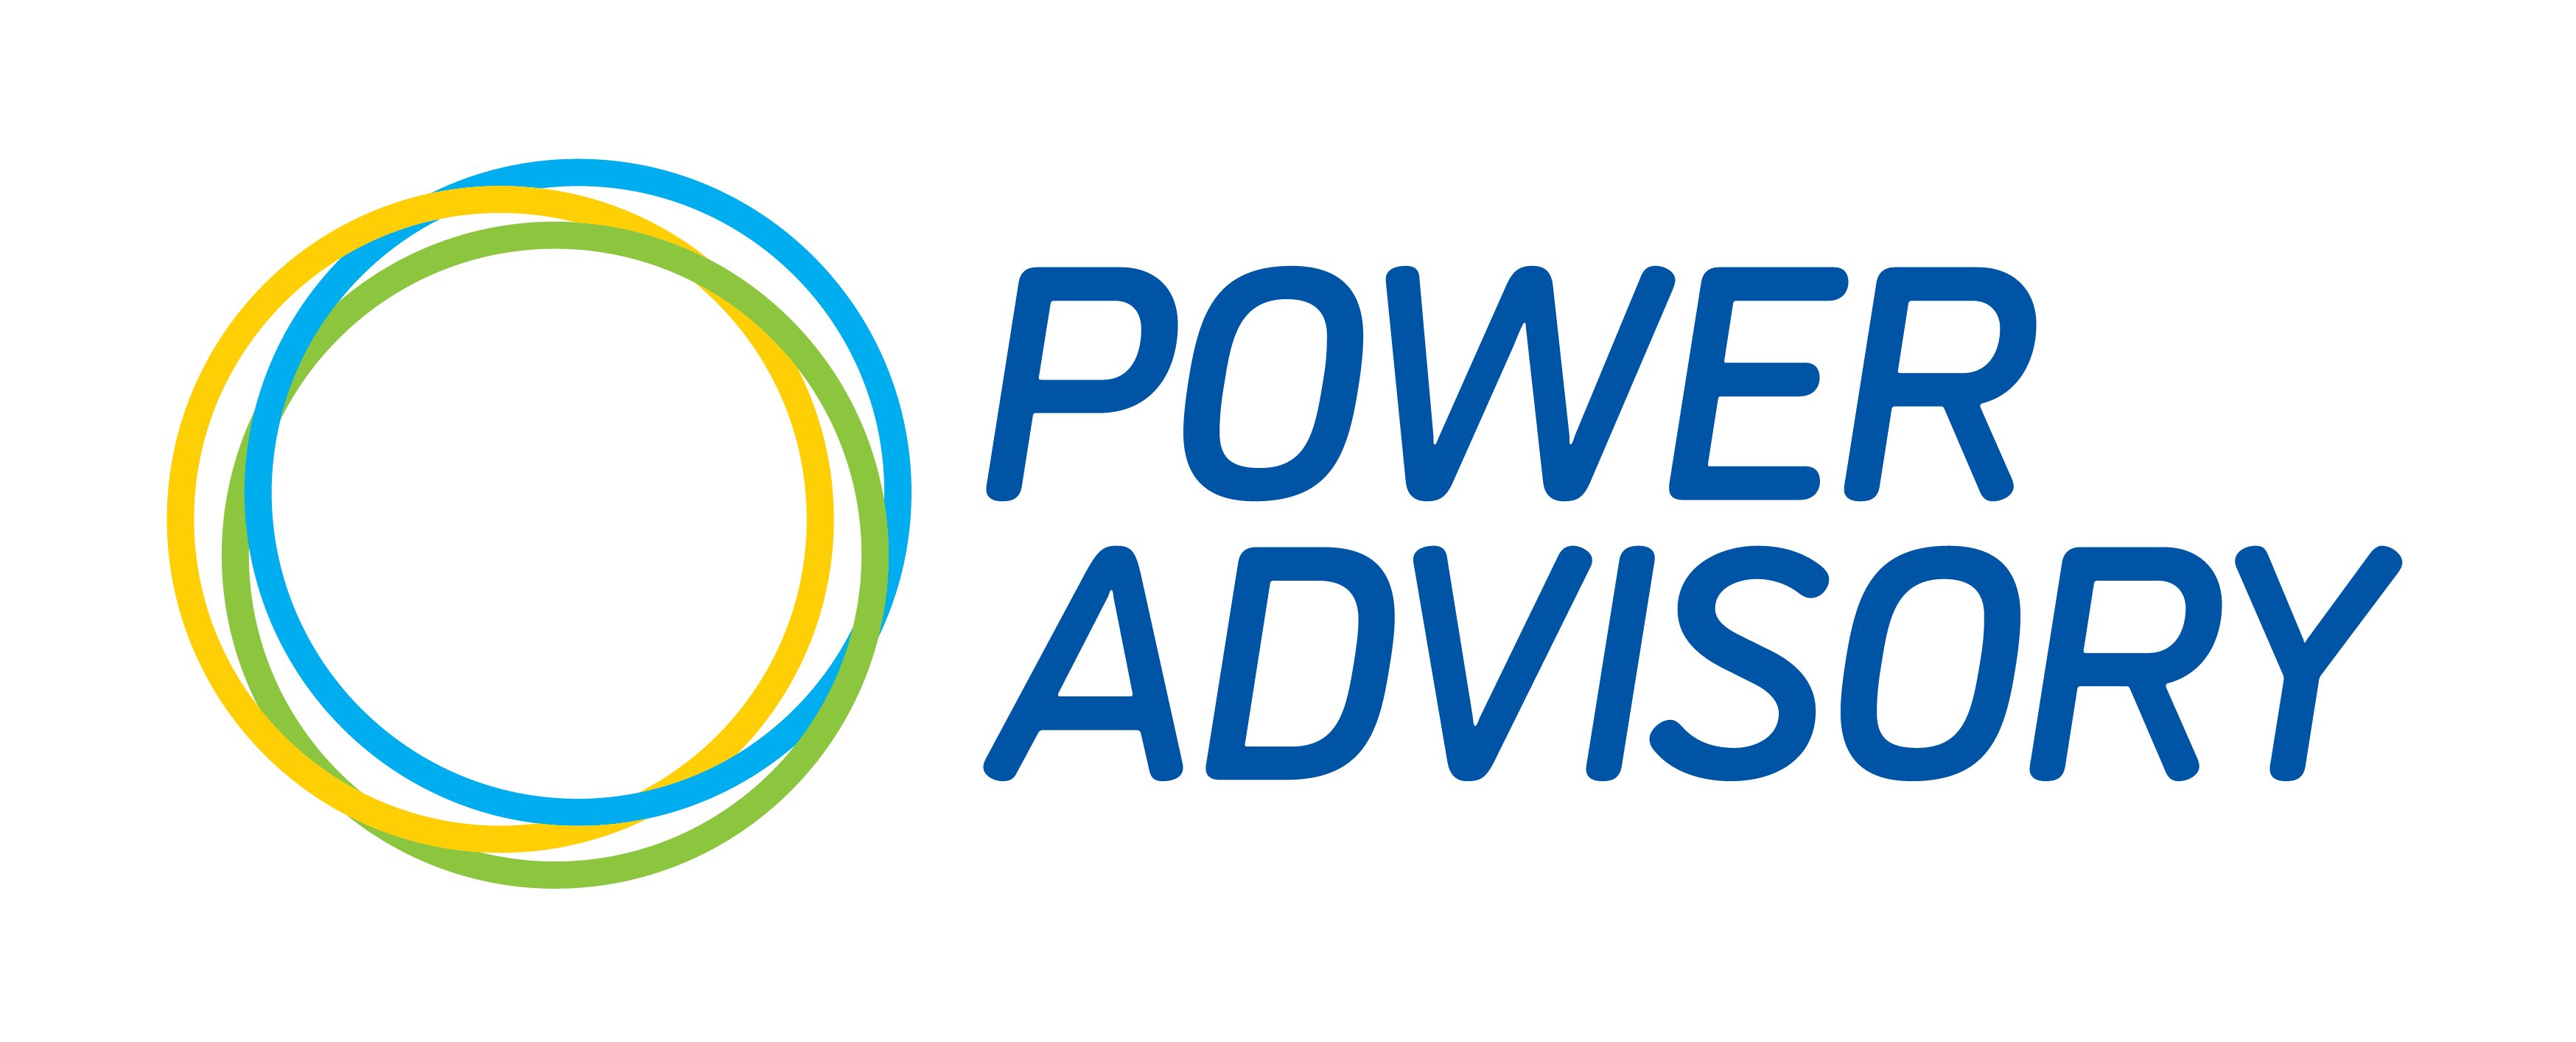 Power advisory logo